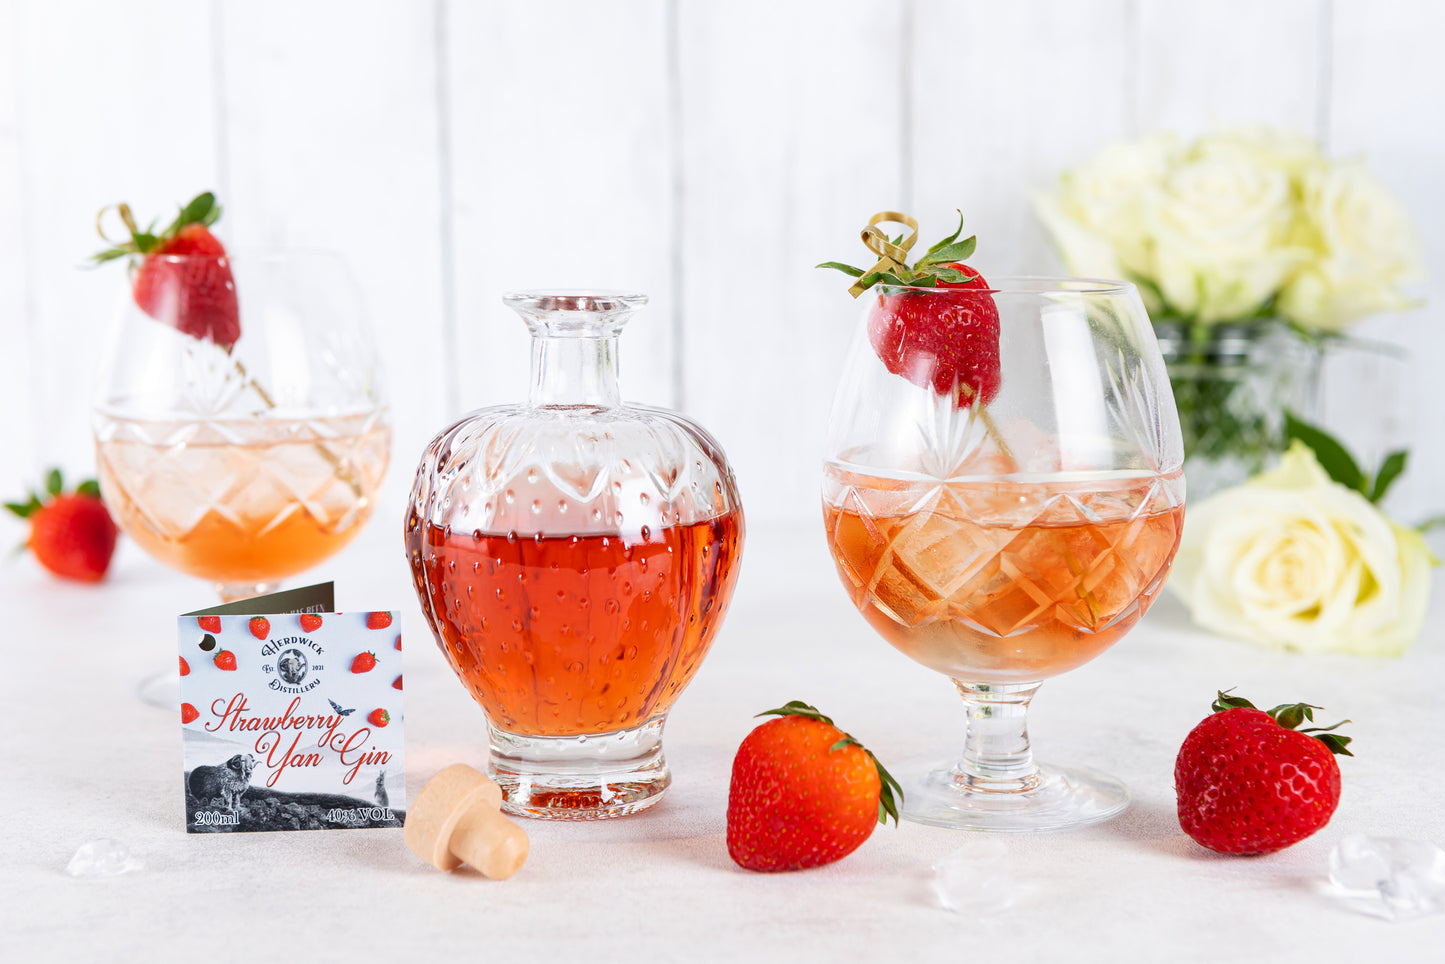 Strawberry Yan Gin by Herdwick Distillery